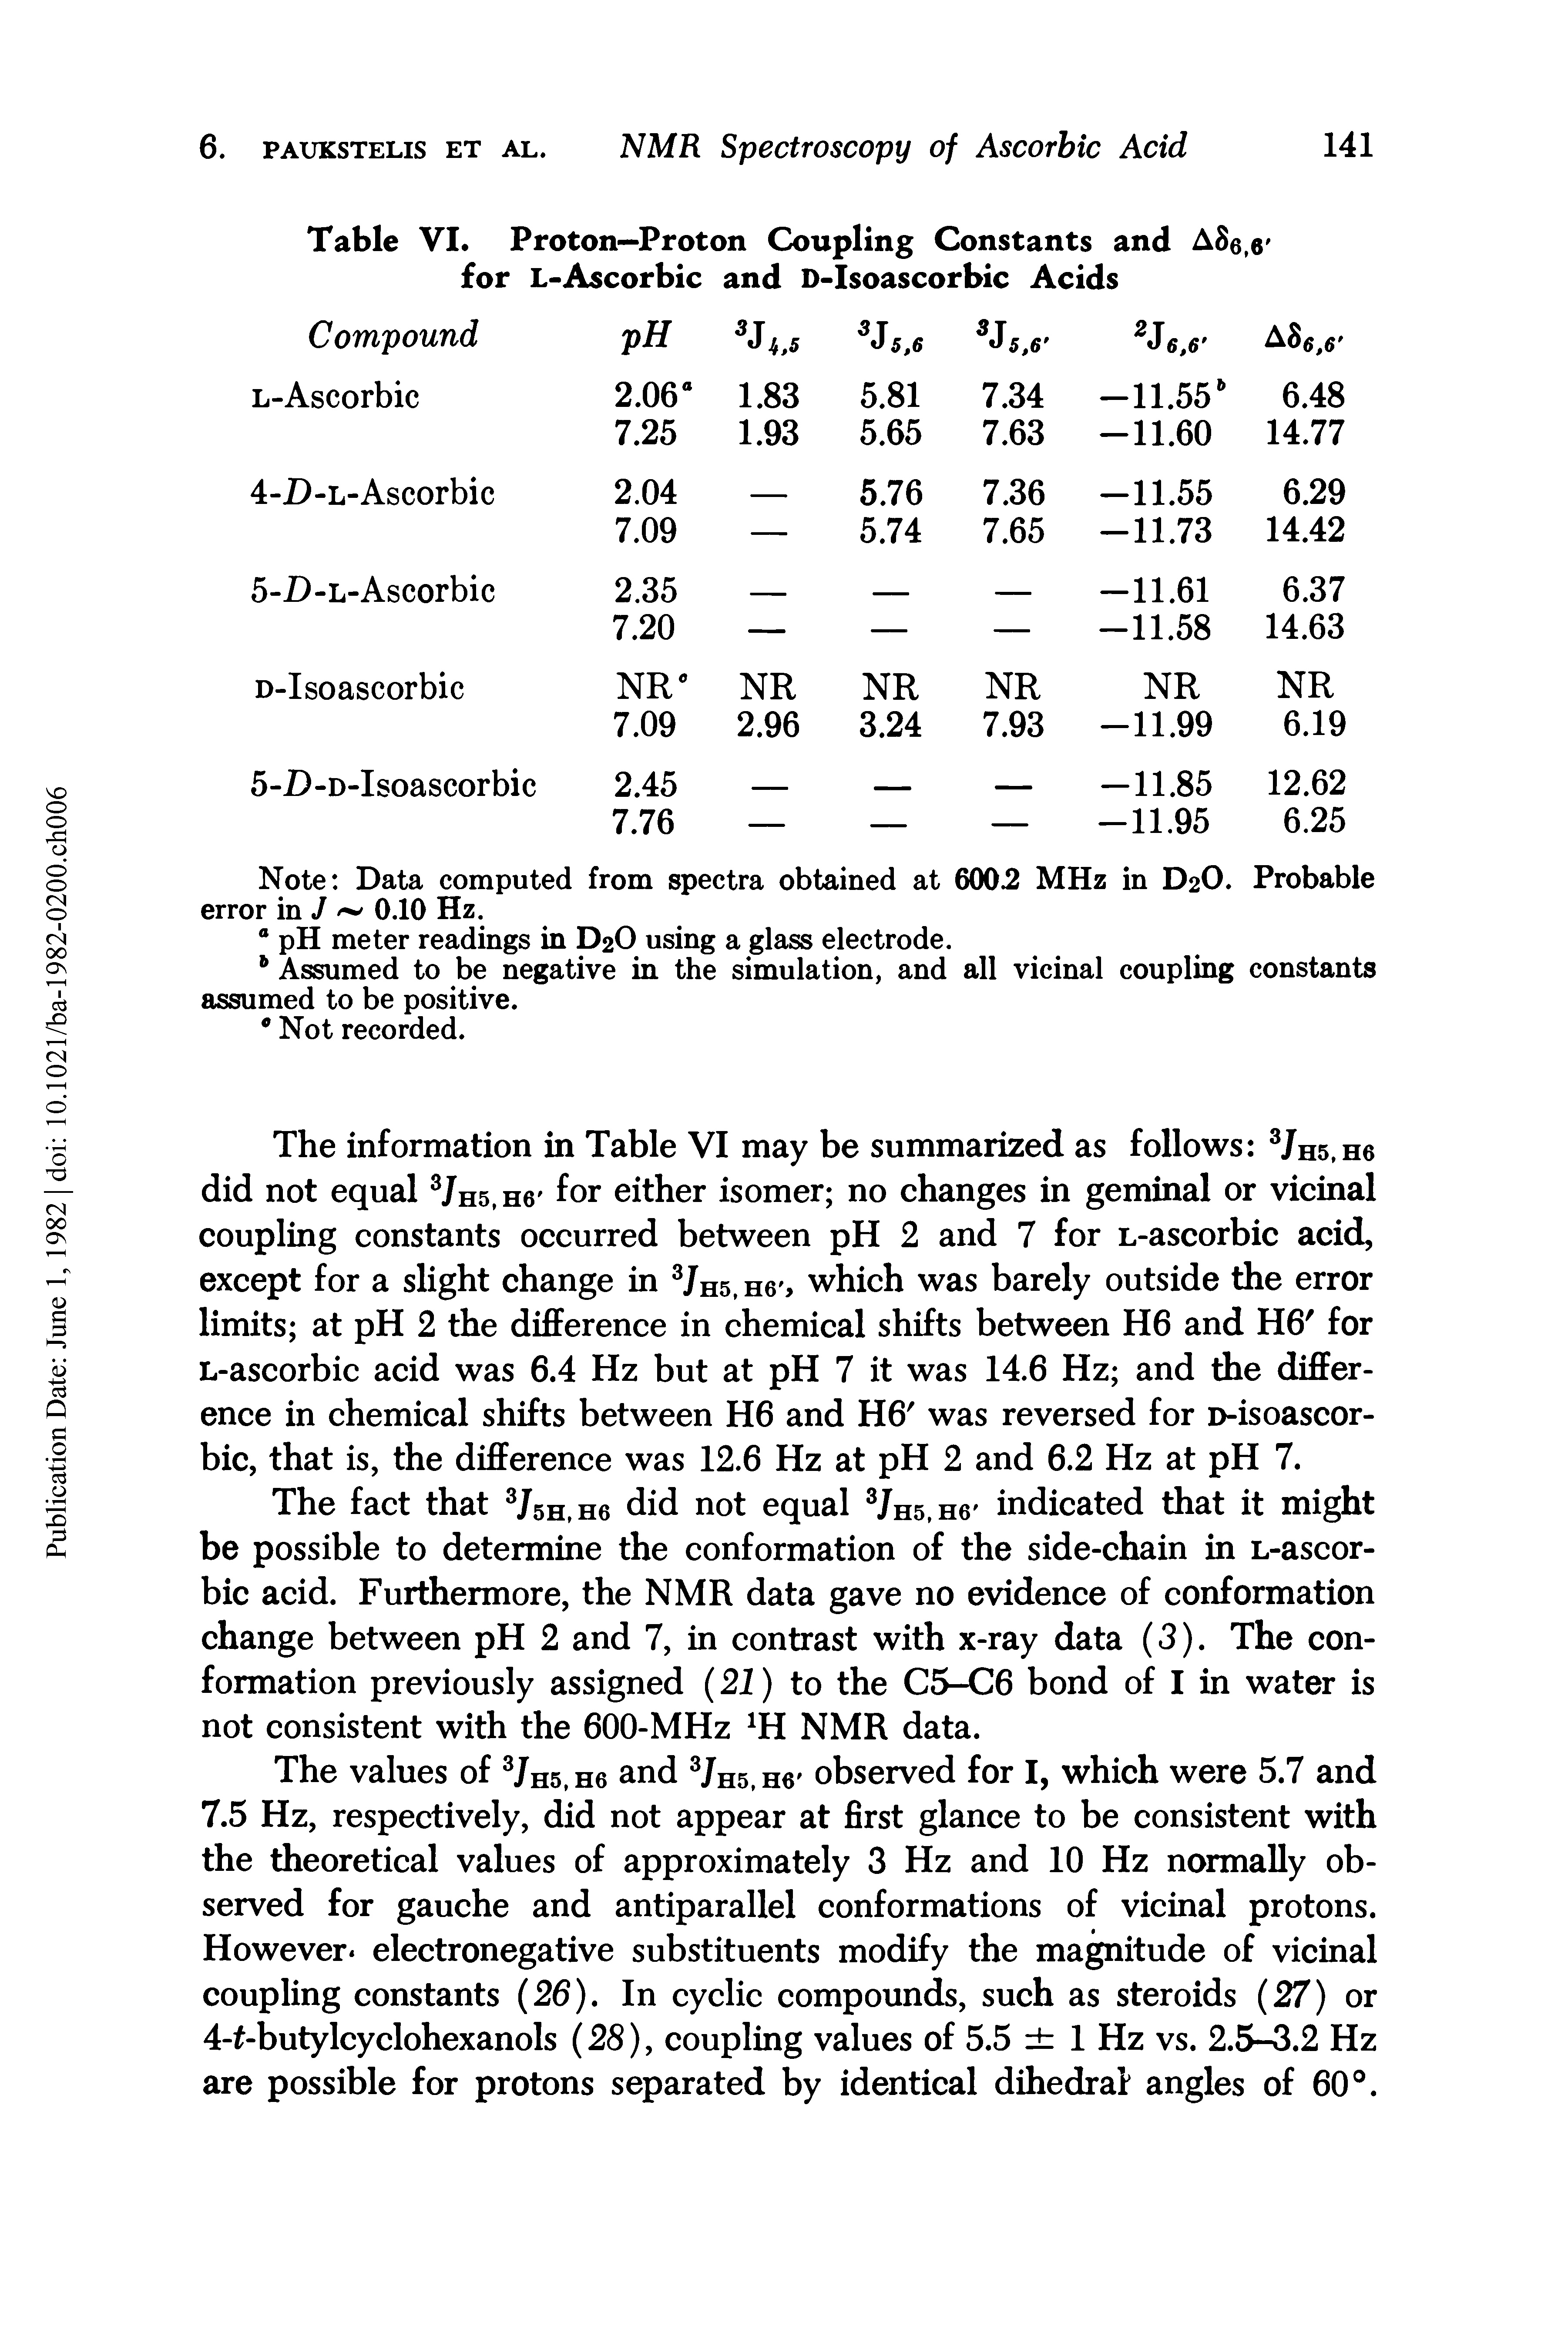 Table VI. Proton—Proton Coupling Constants and ASe,( for L-Ascorbic and D-Isoascorbic Acids...